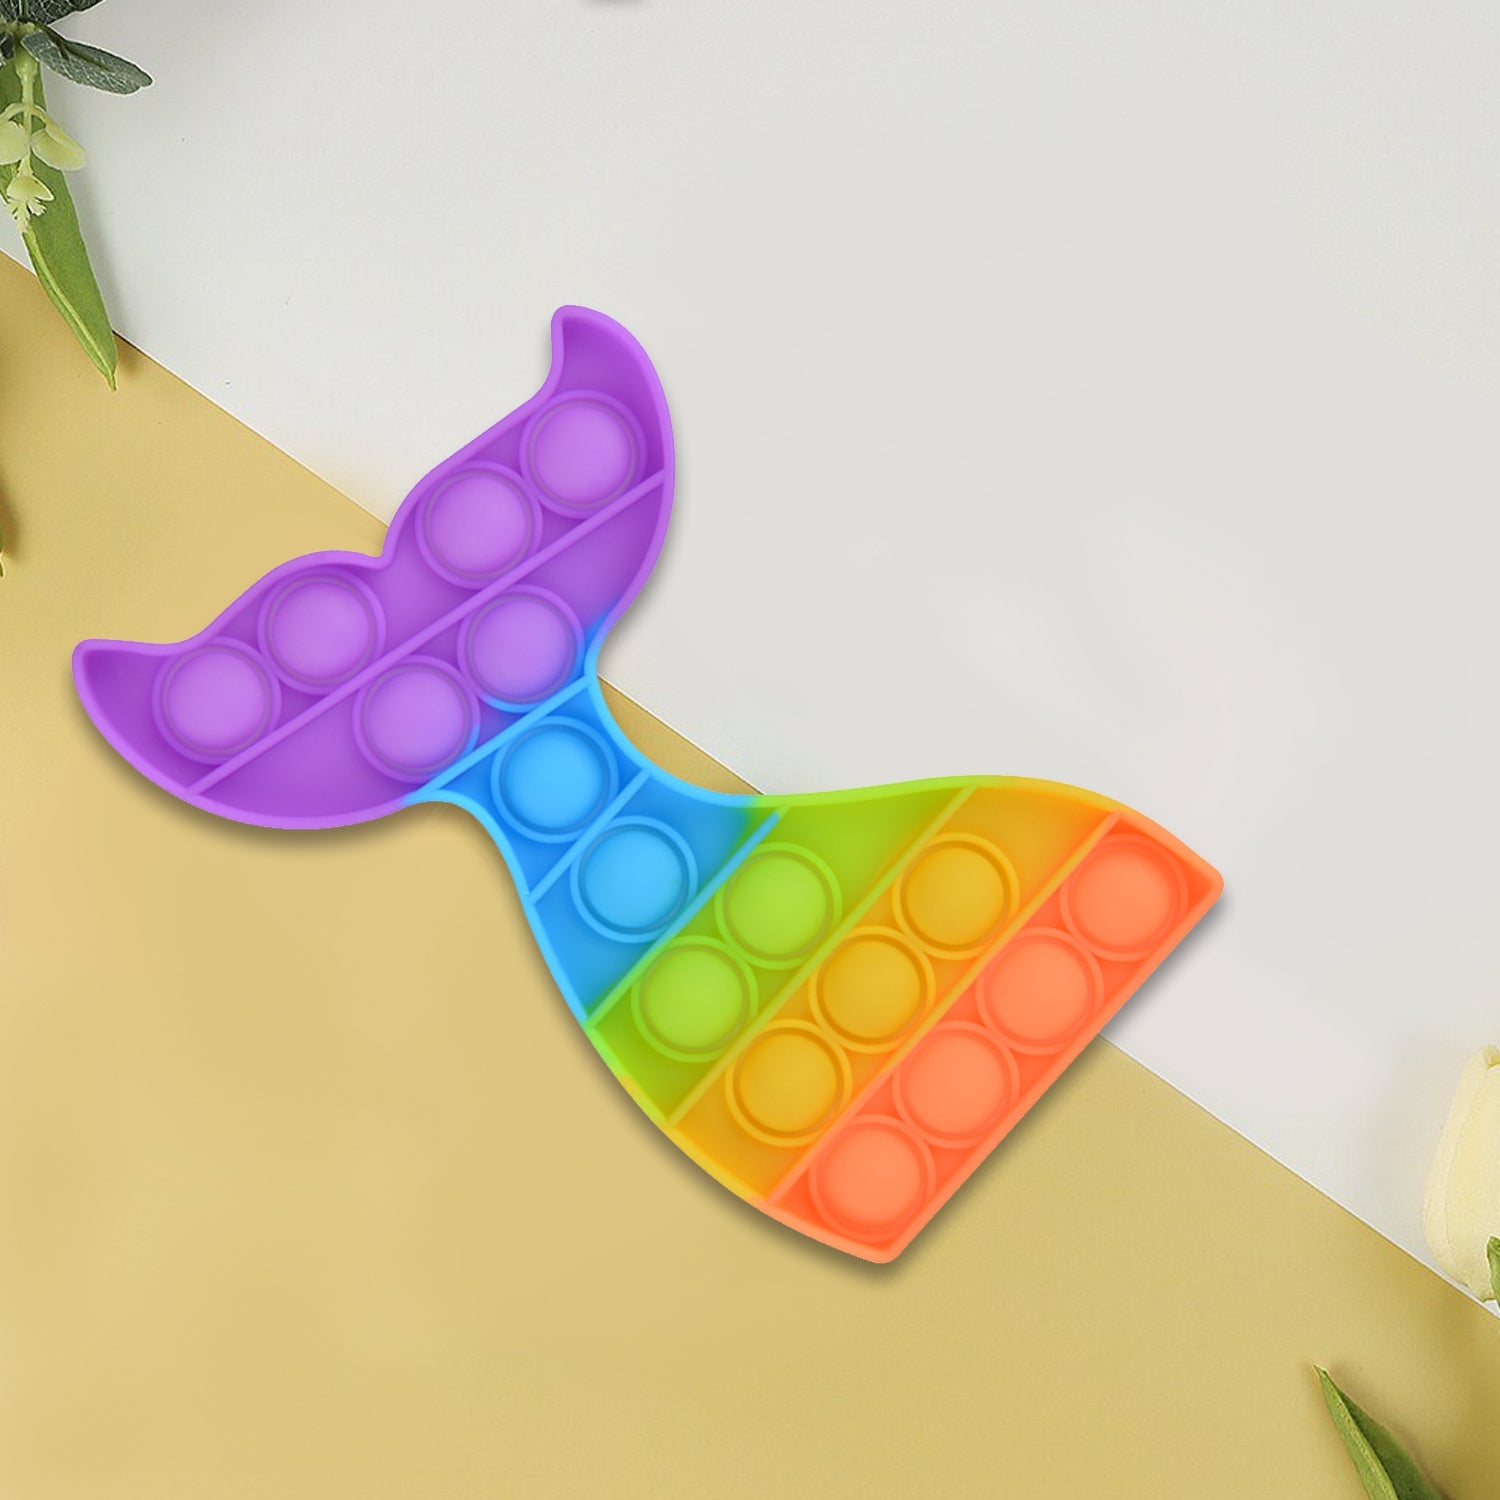 4899 Mermaid Tail Fidget Toys, Push Pop Bubble Fidget Sensory Toy DeoDap